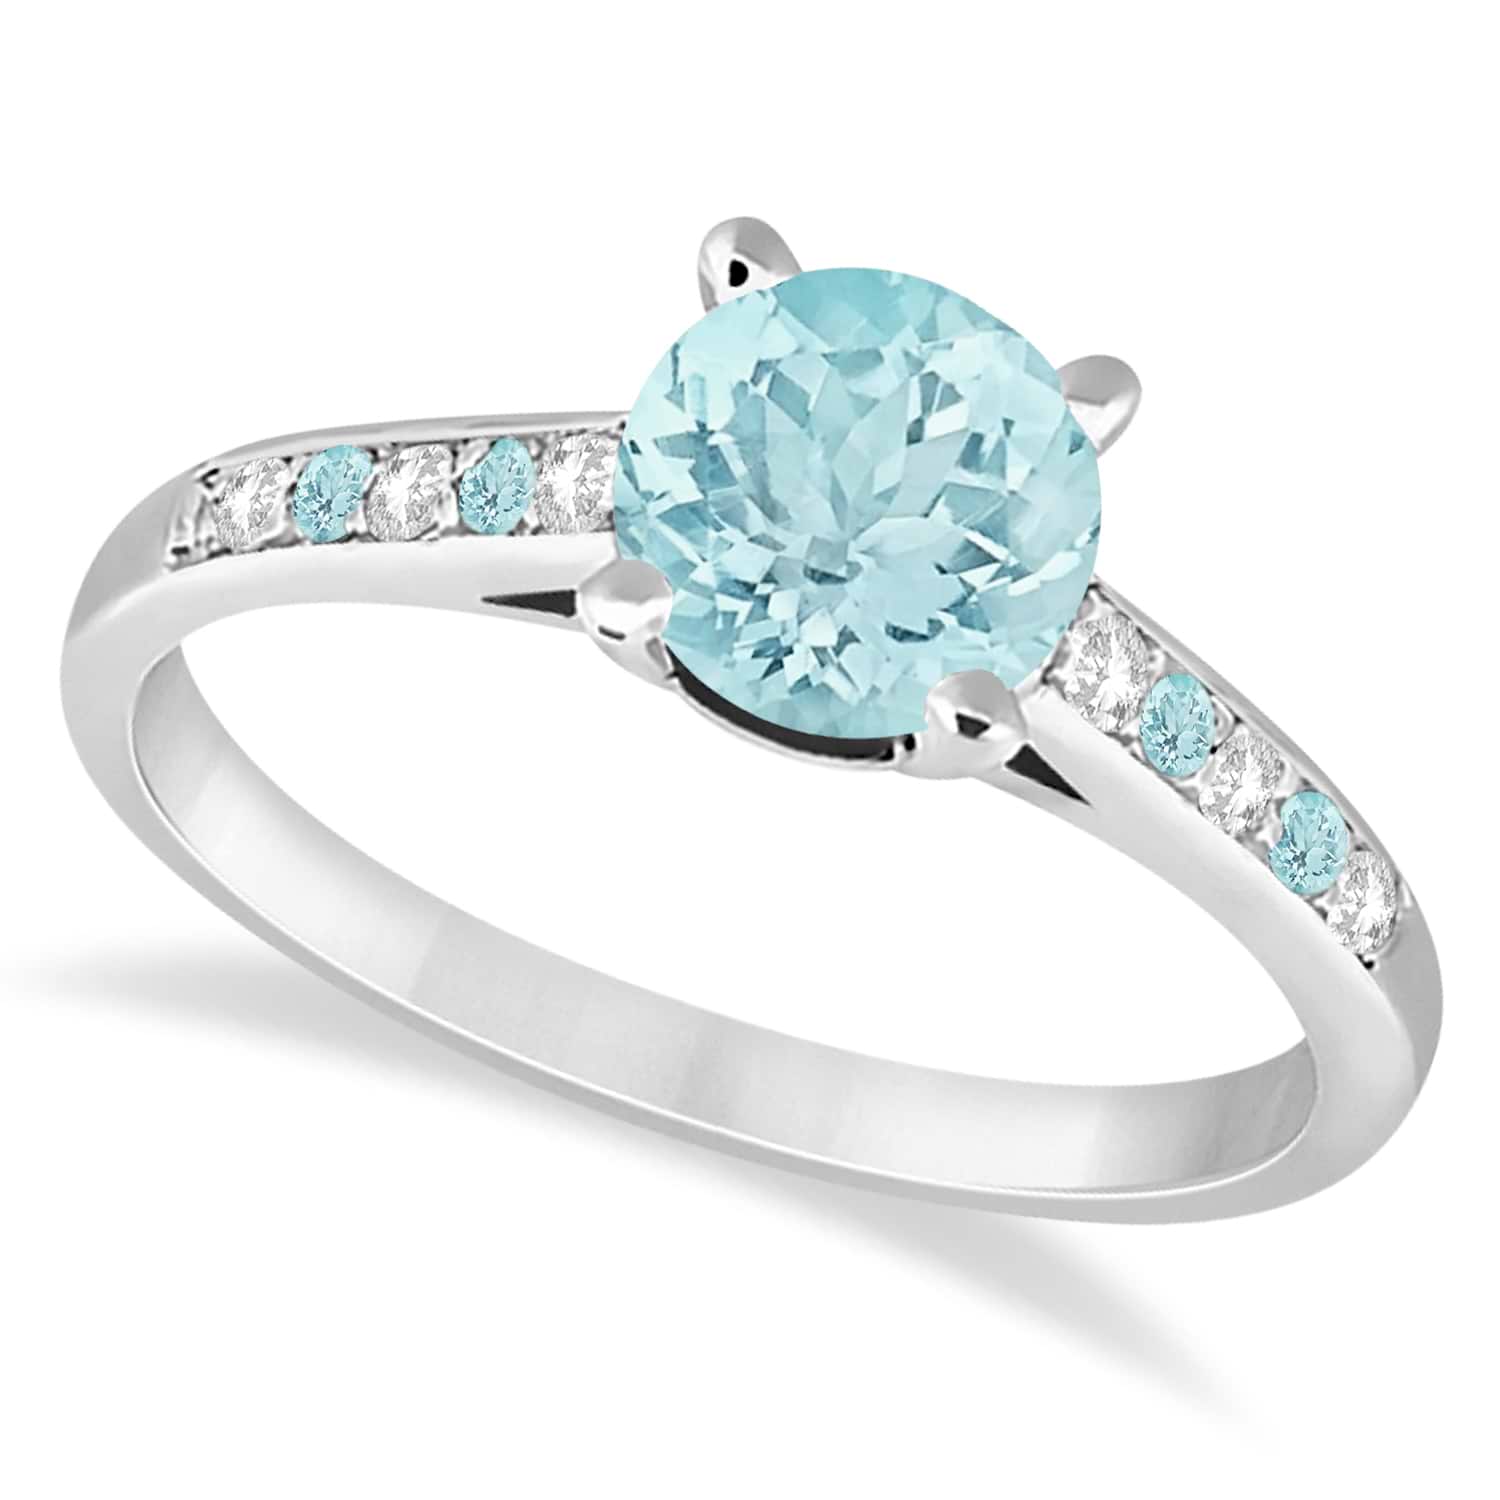 Cathedral Aquamarine & Diamond Engagement Ring 18k White Gold (1.20ct)